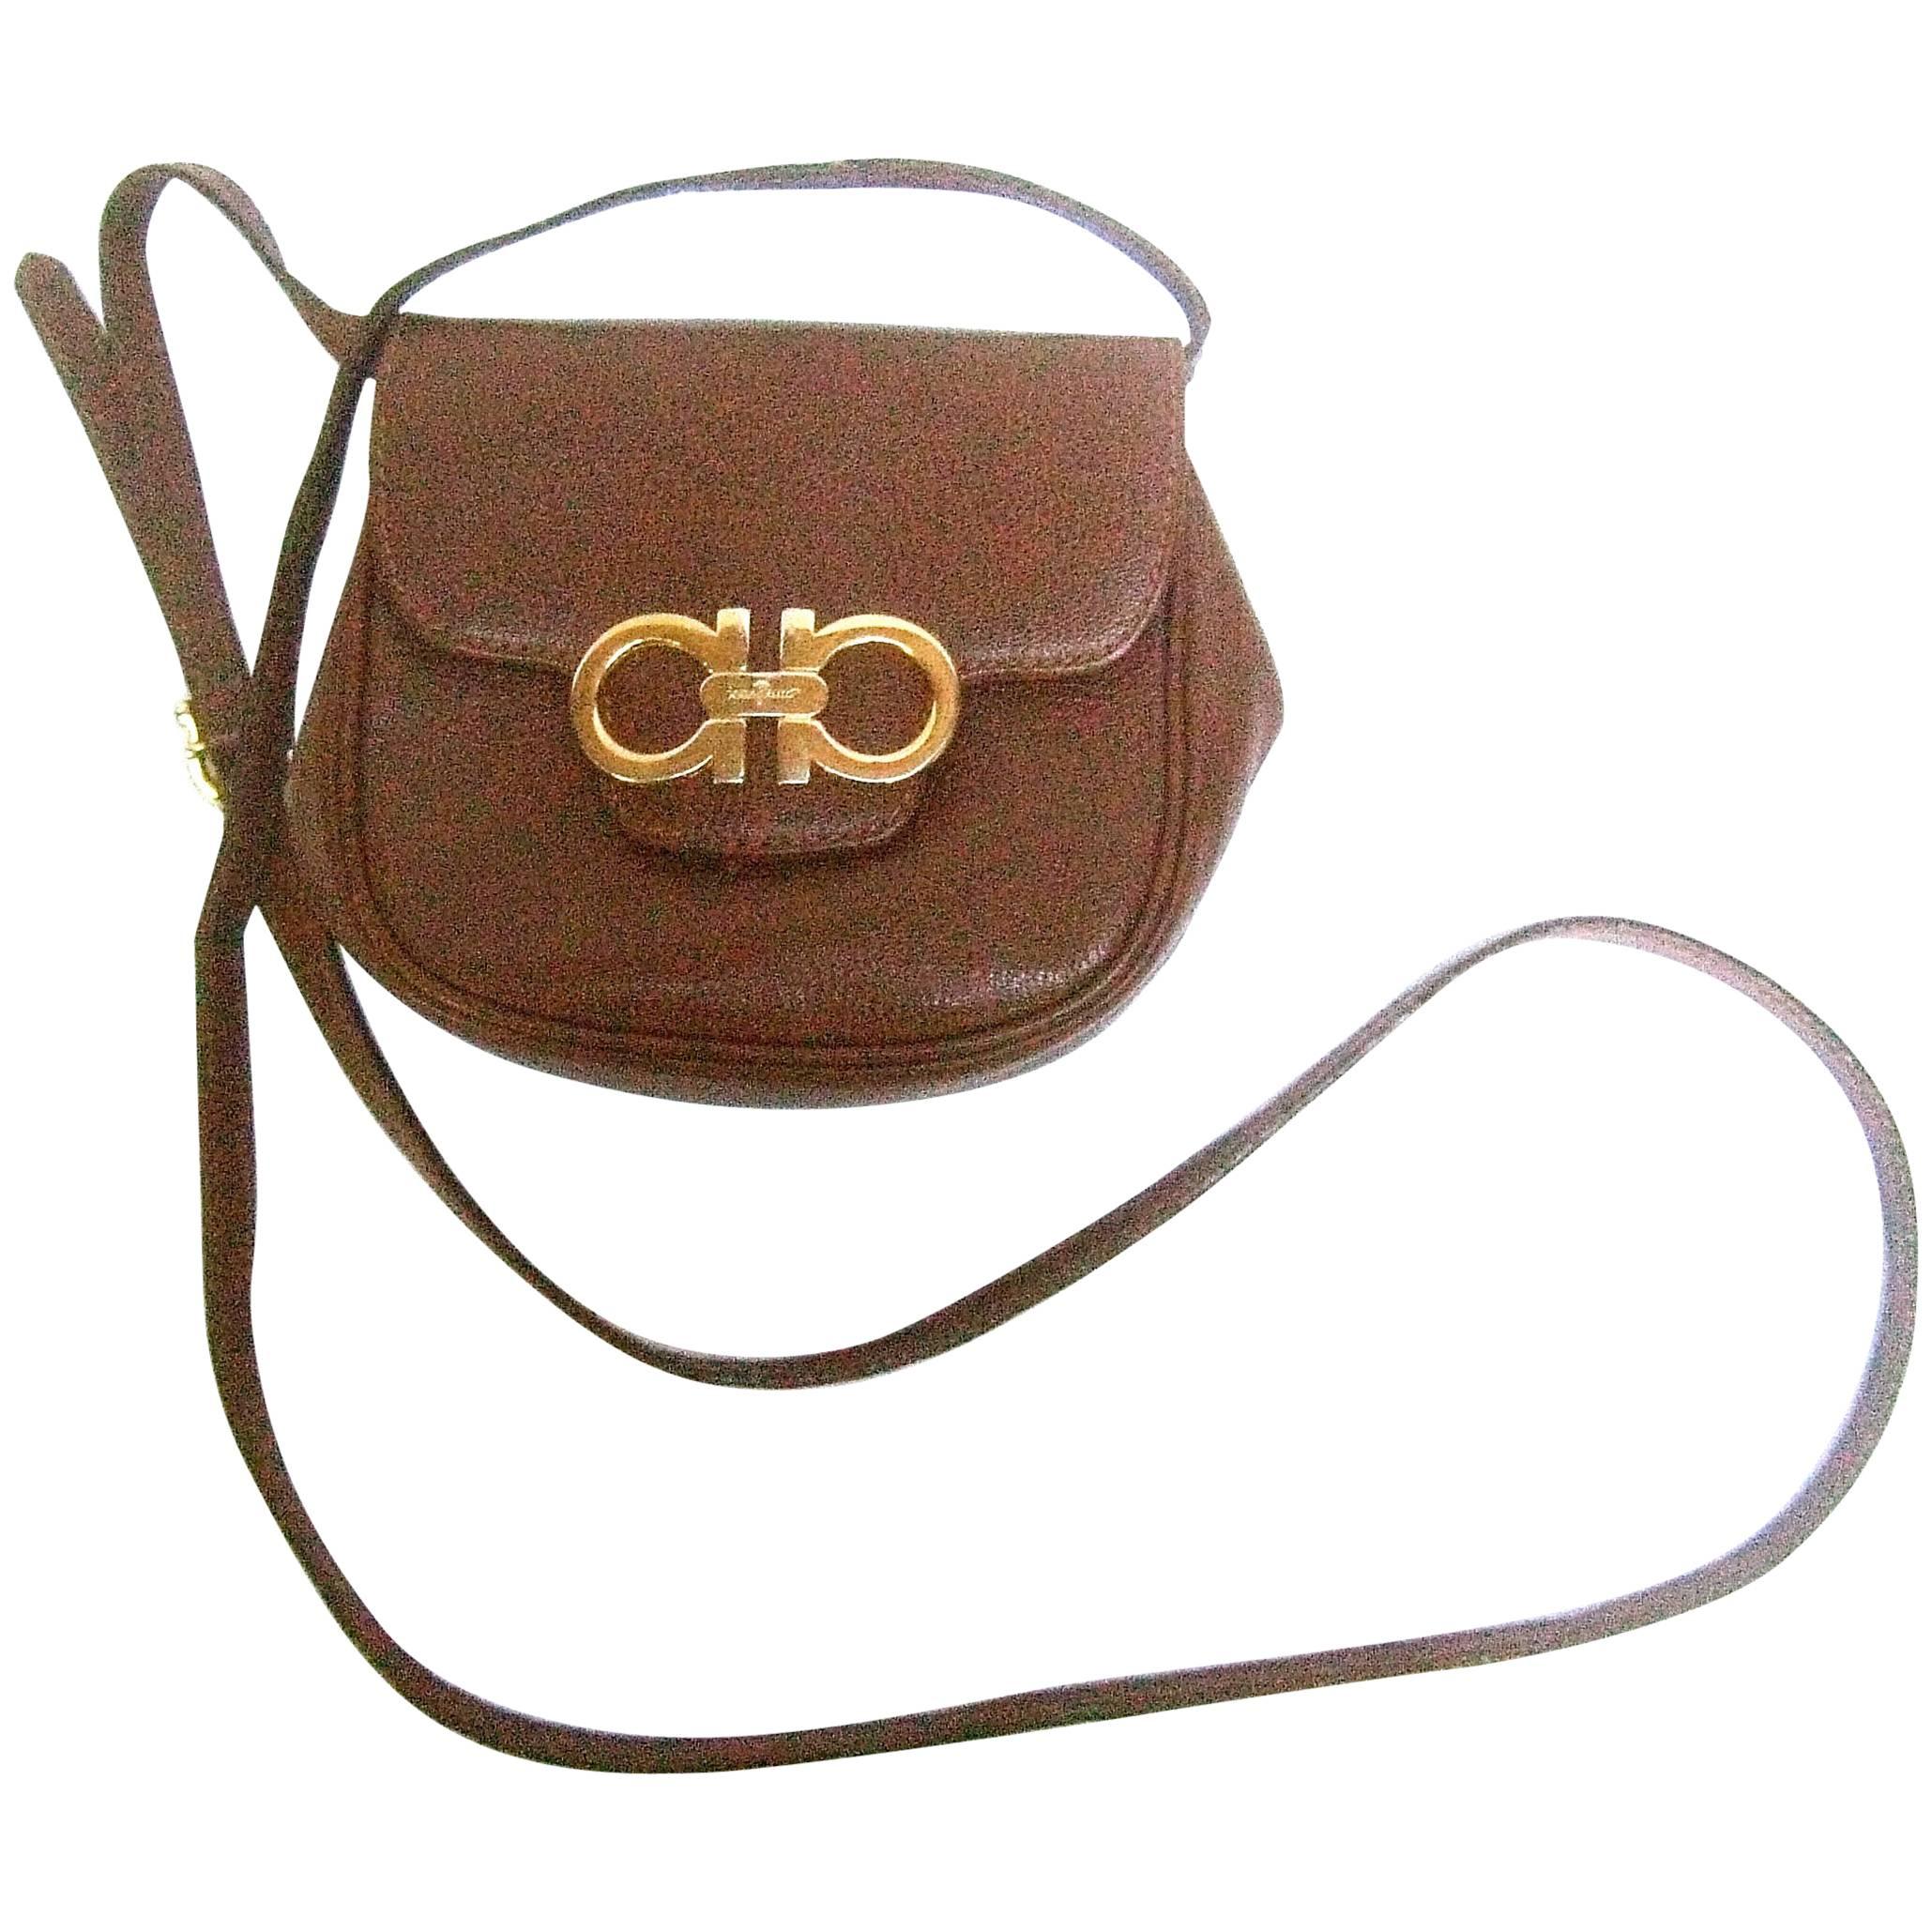 Salvatore Ferragamo Italy Diminutive Tiny Brown Leather Shoulder Bag 